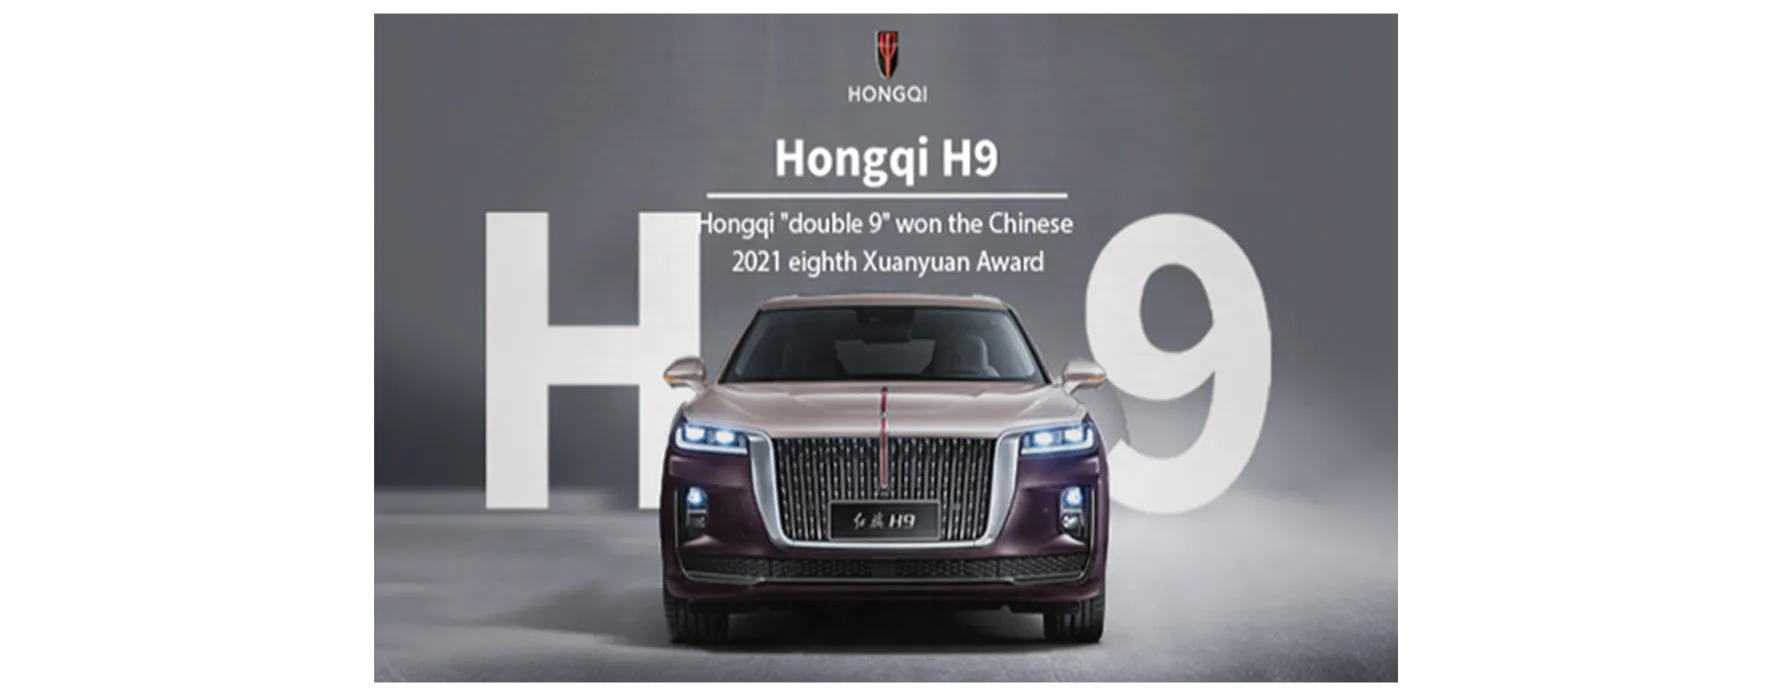 HONGQI "DOUBLE 9" WON THE CHINESE 2021 EIGHTH XUANYUAN AWARD